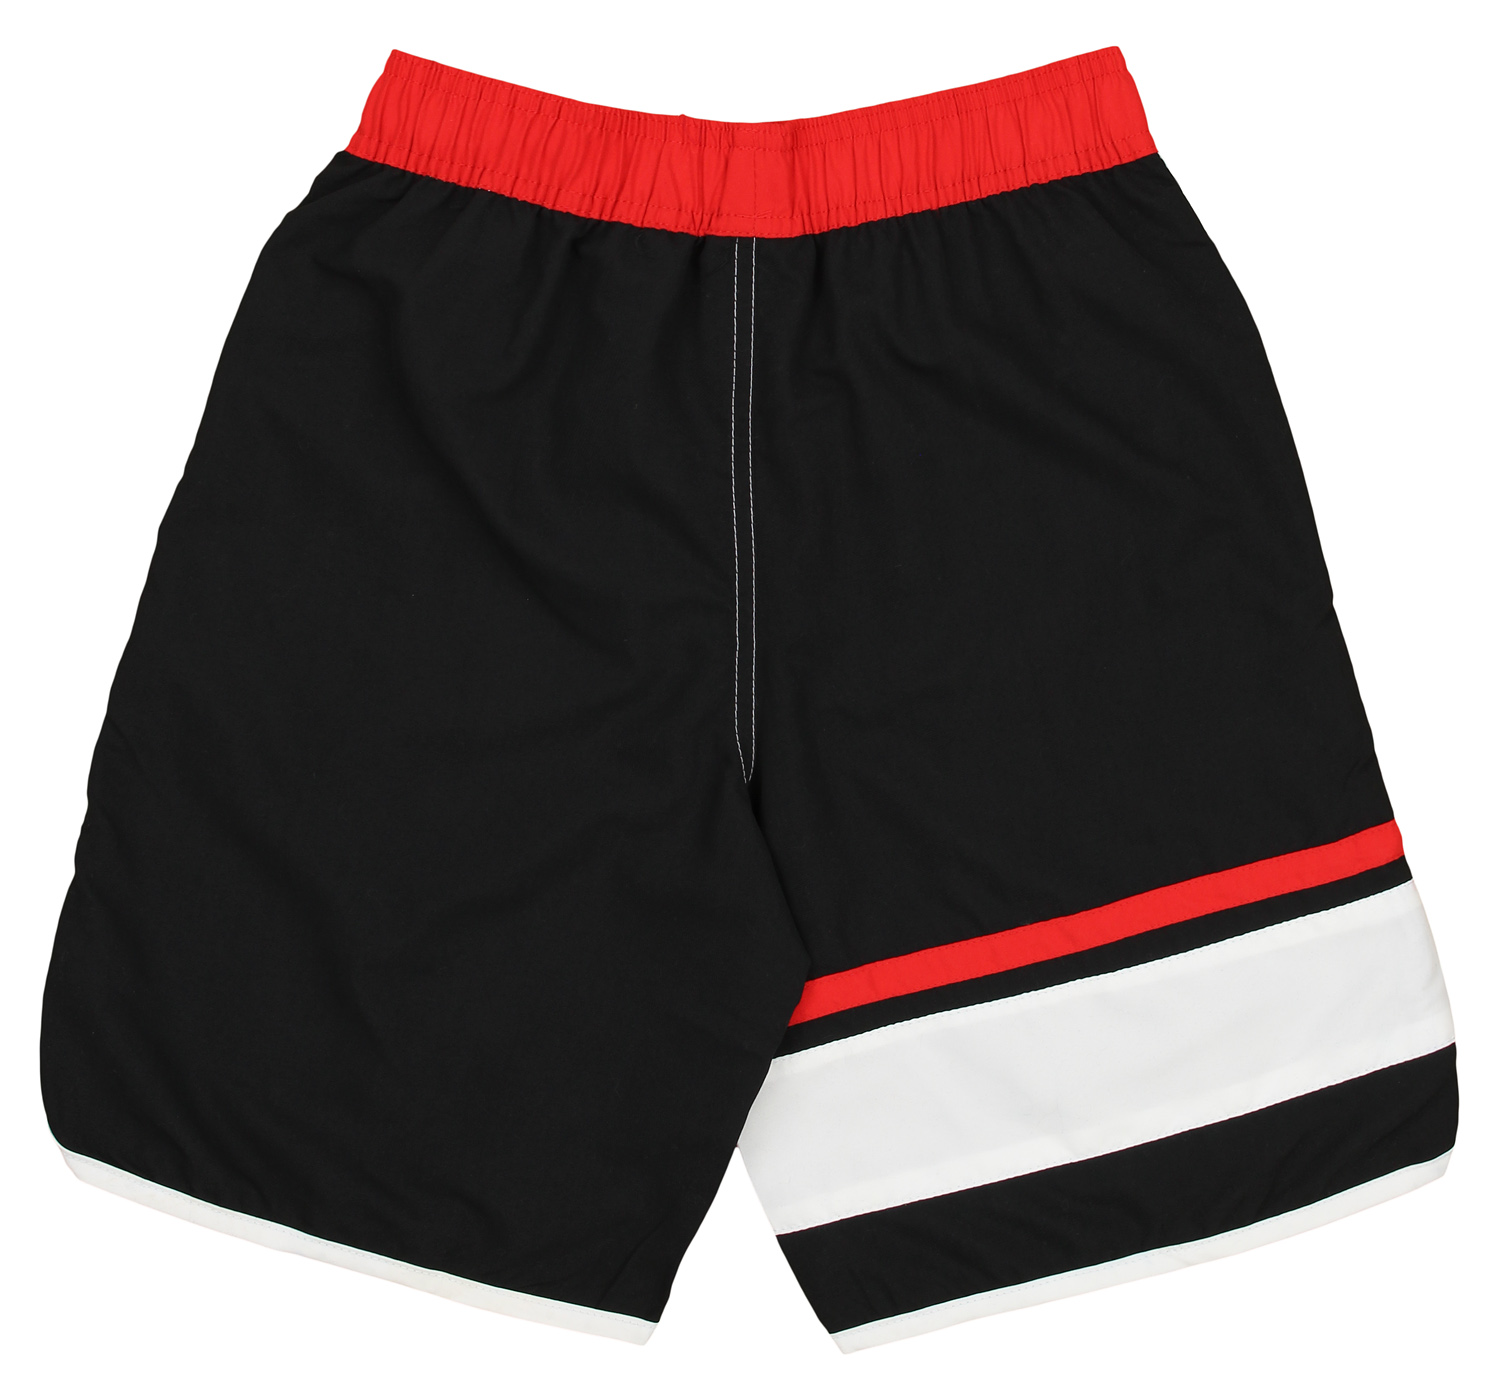 Outerstuff NHL Youth (8-20) New Jersey Devils Swim Shorts, Black | eBay